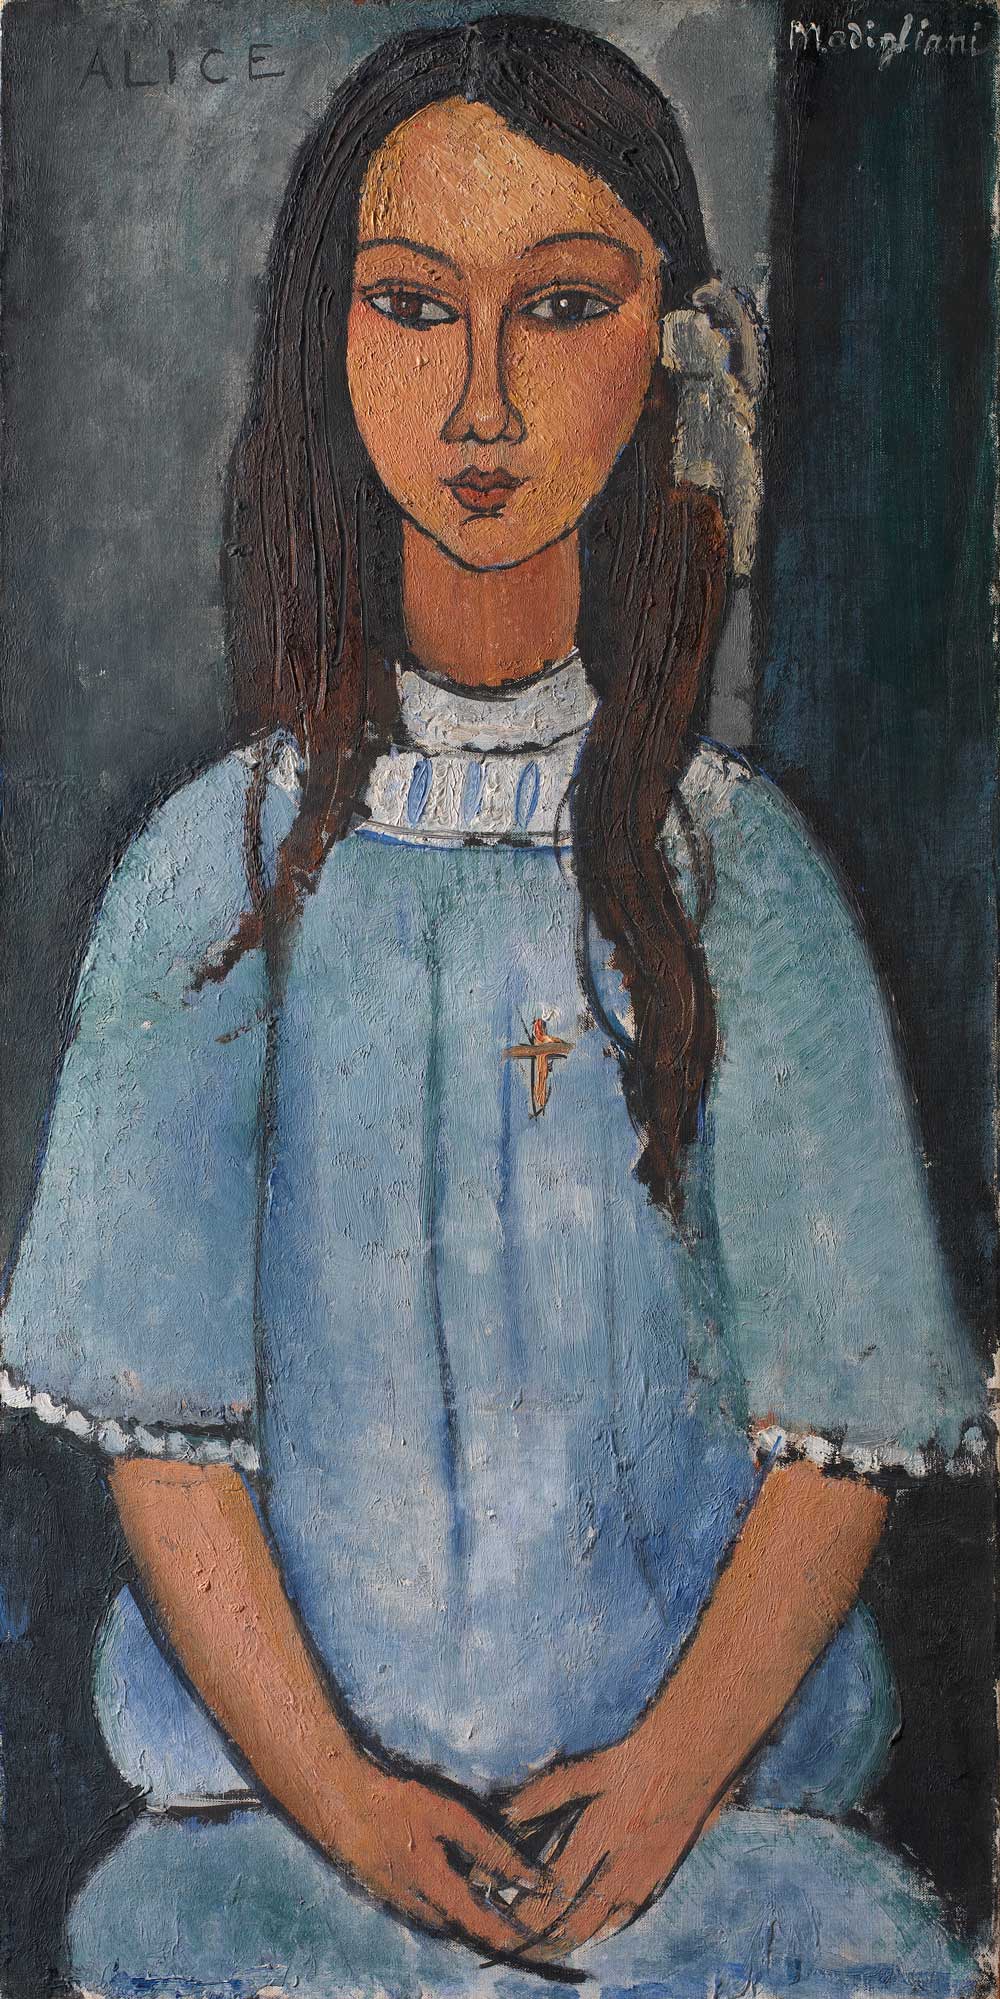 Alice by Amedeo Modigliani 1906